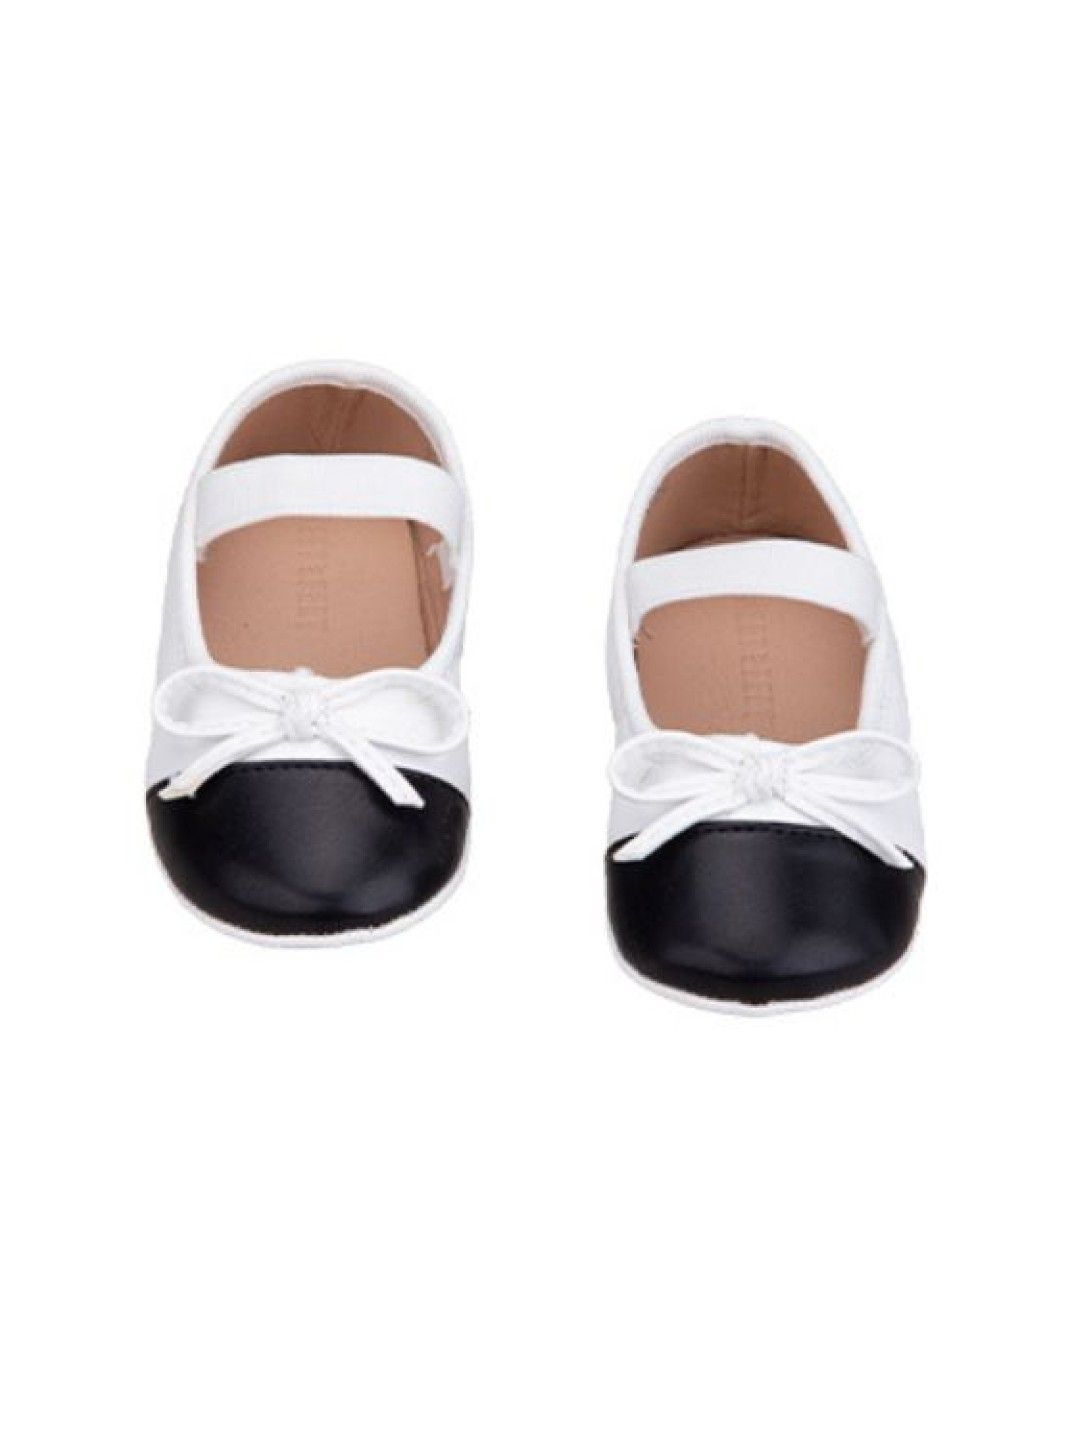 Meet My Feet Tai - Infant Maryjanes or Ballerina Flats For Girls (White/Black- Image 1)